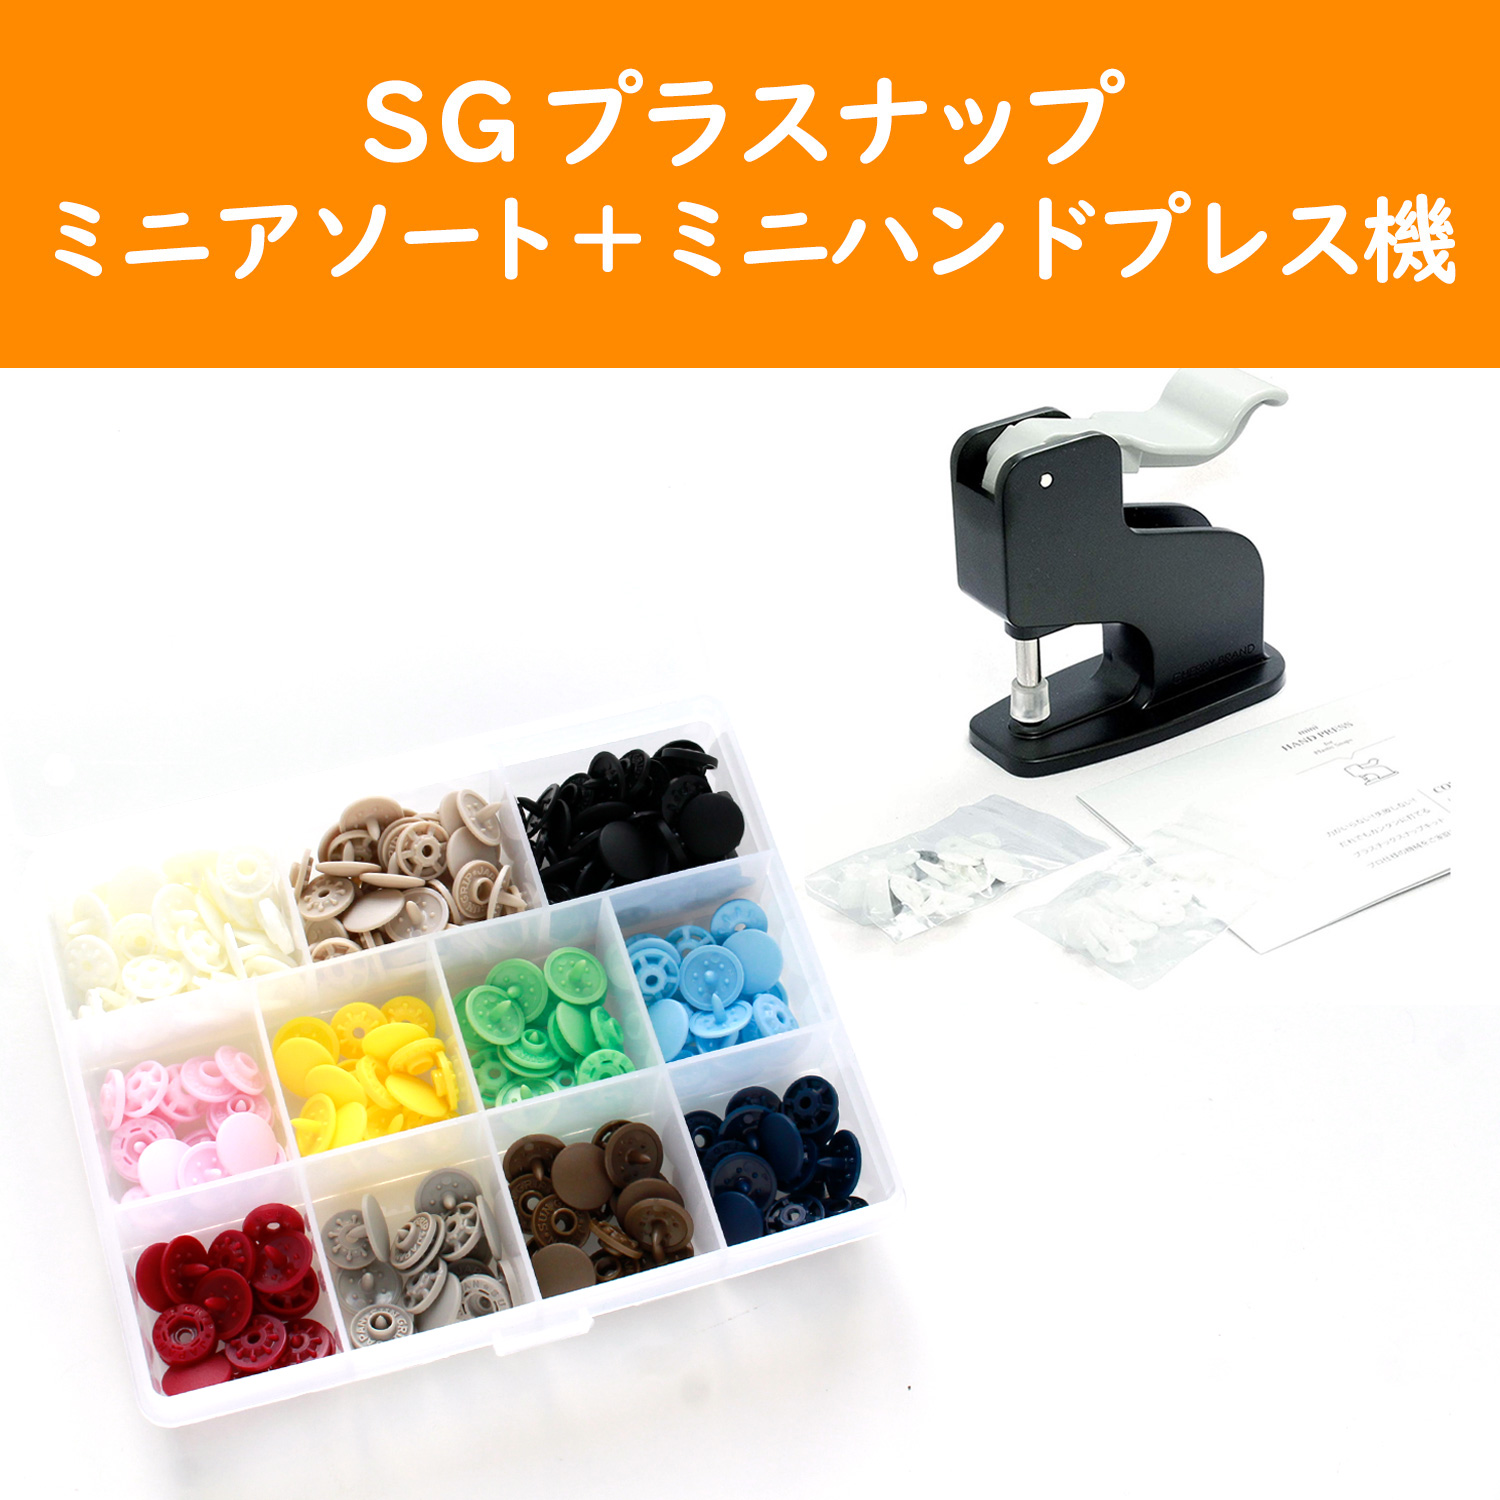 SG-MINISET-CL　スナップボタンミニアソート＋ミニハンドプレス機セット (セット)